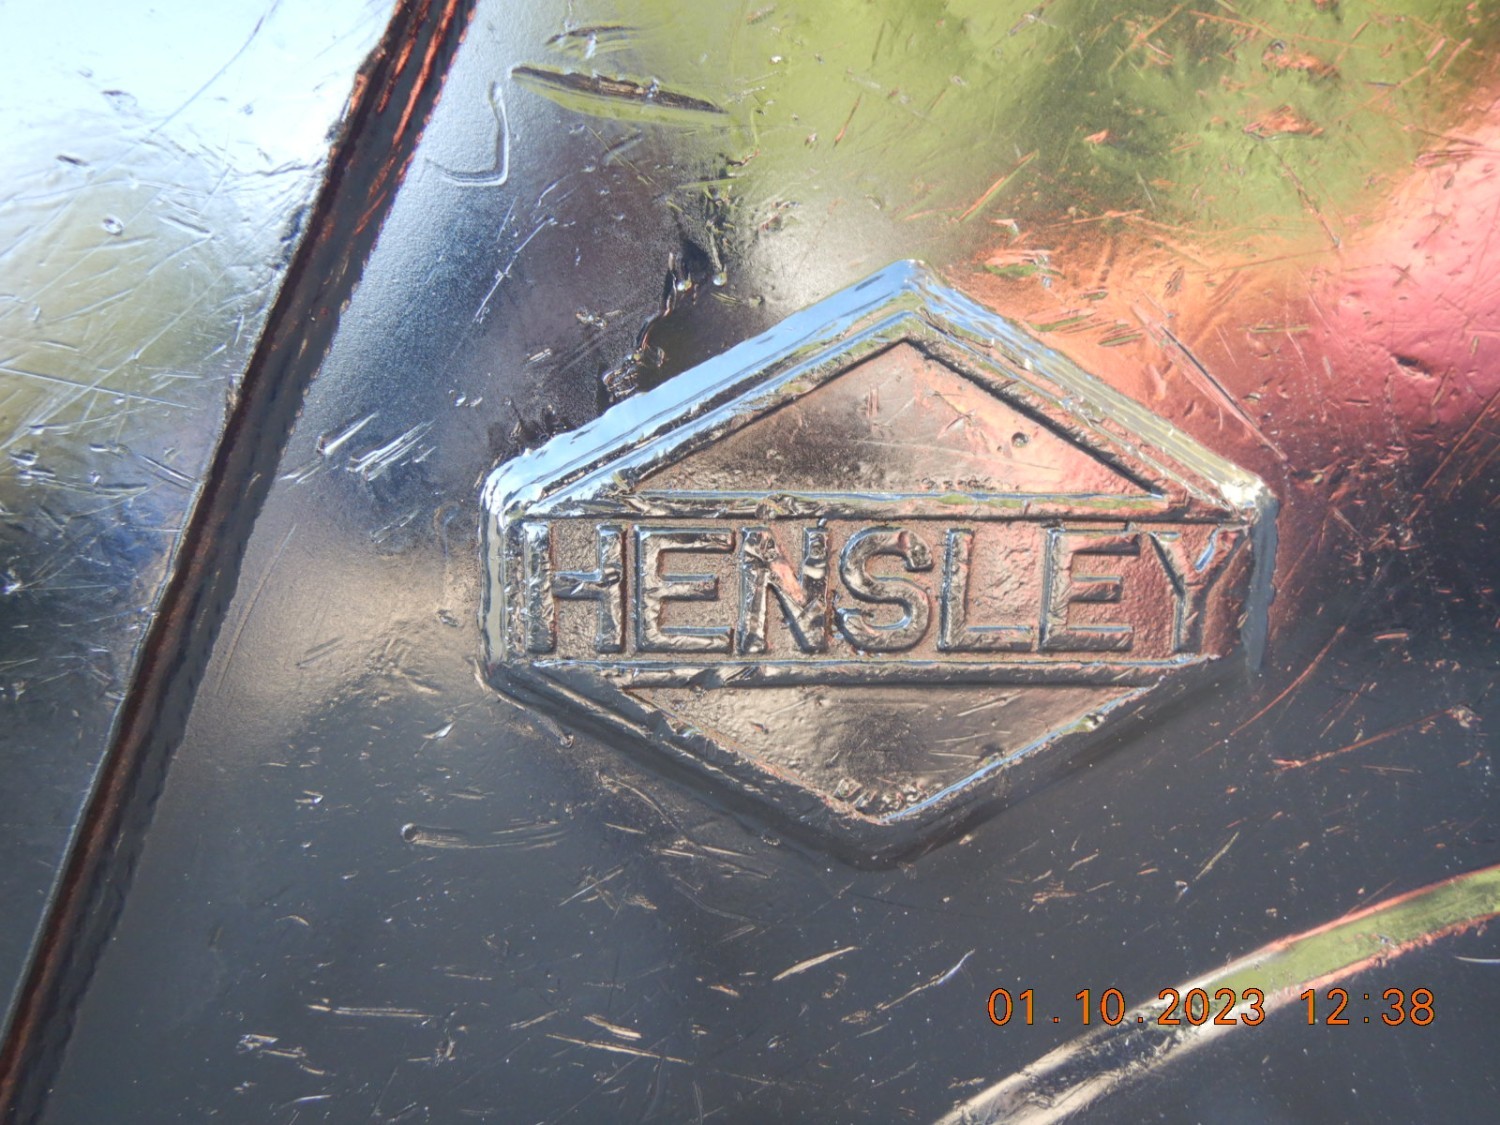 68k-of-hensley-hpx-400-490-komatsu-extreme-duty-30-46-70-in-buckets-big-3